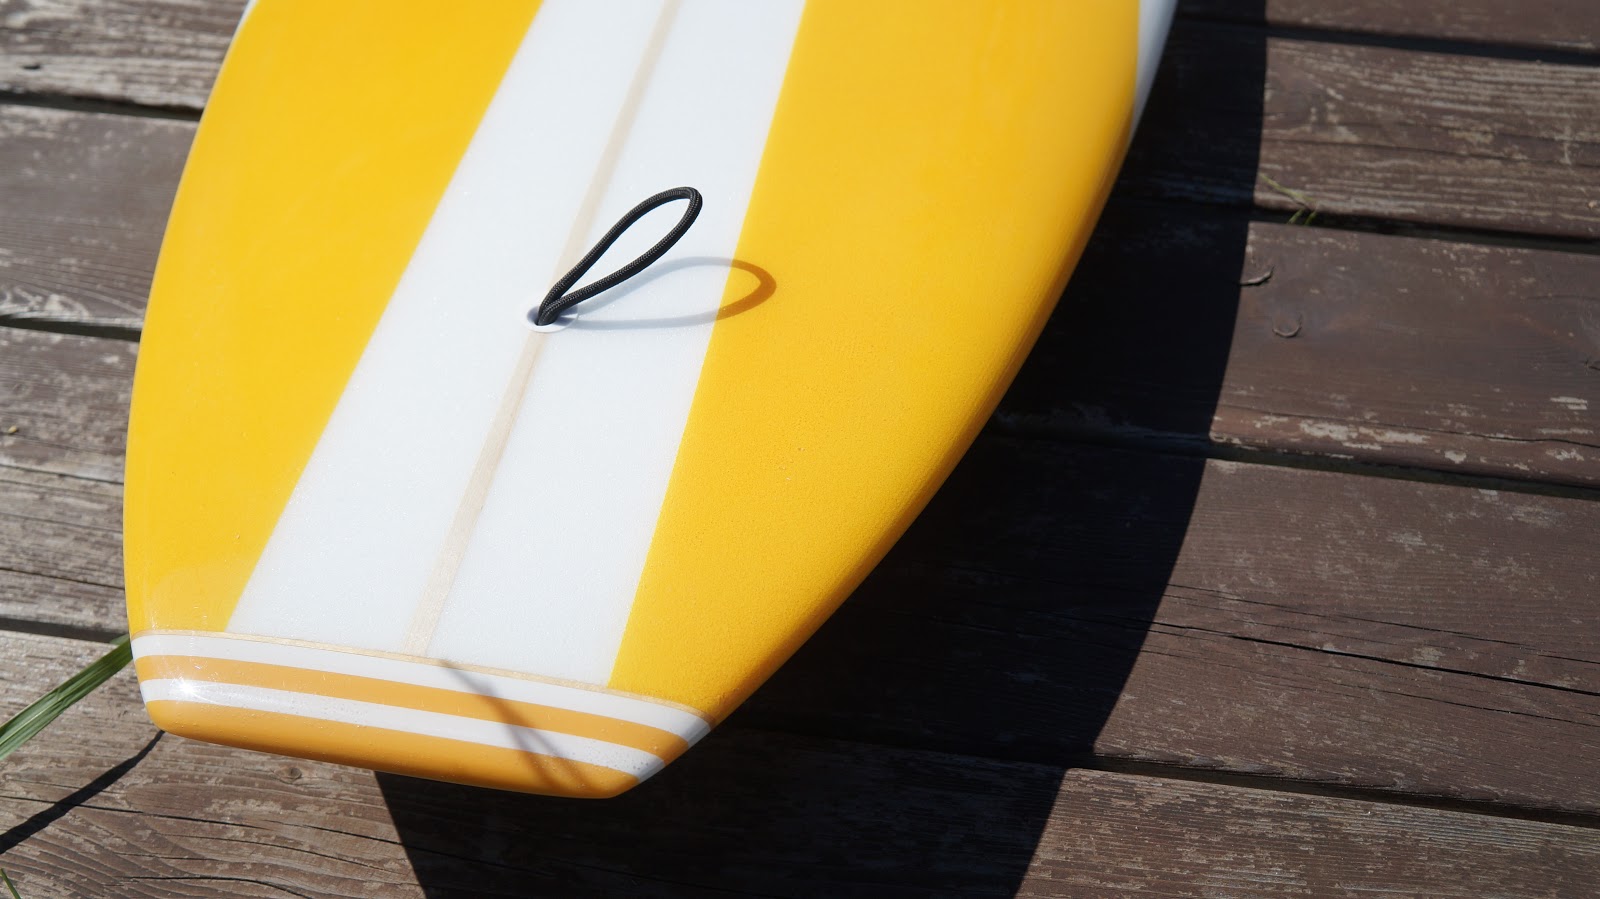 9'3 WINGNUT 2 by Robert August Surfboard